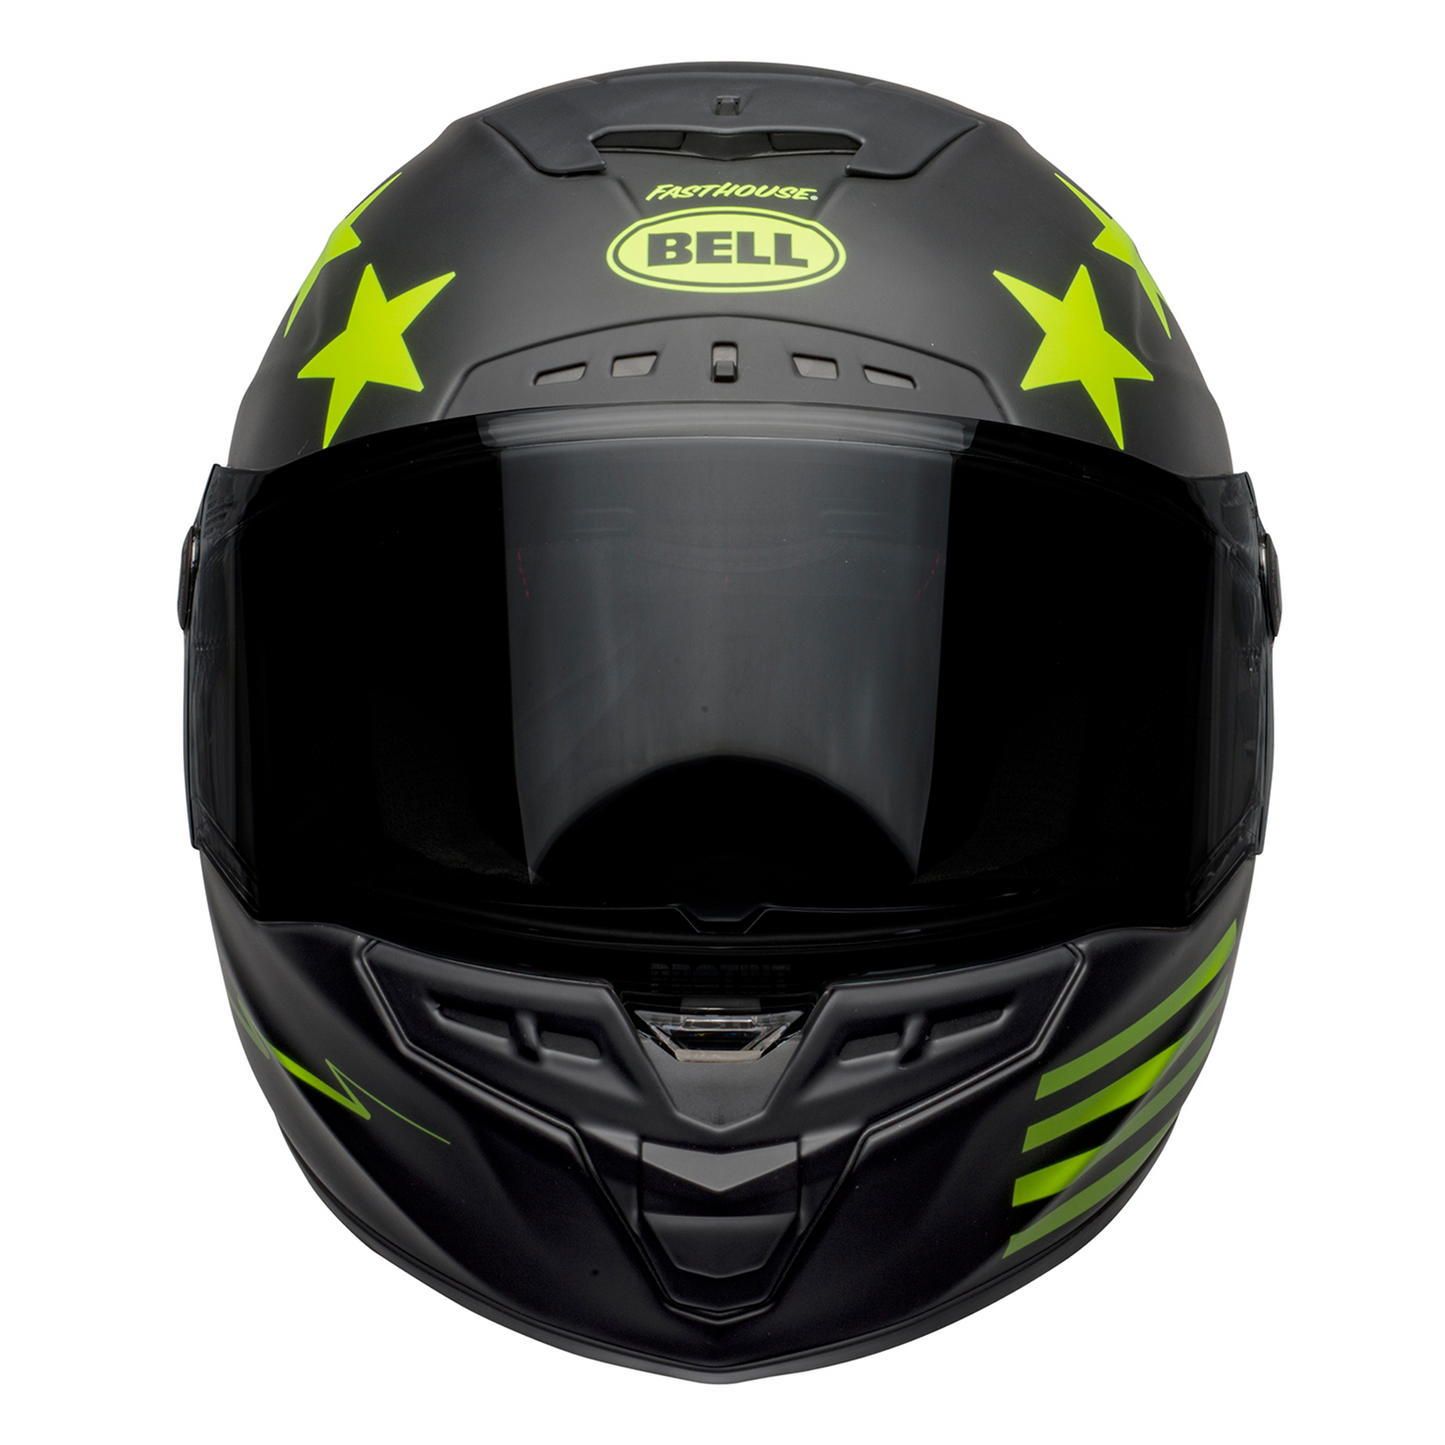 Bell Star DLX MIPS - Fasthouse Matt Black/Hi Viz - Includes Dark Visor